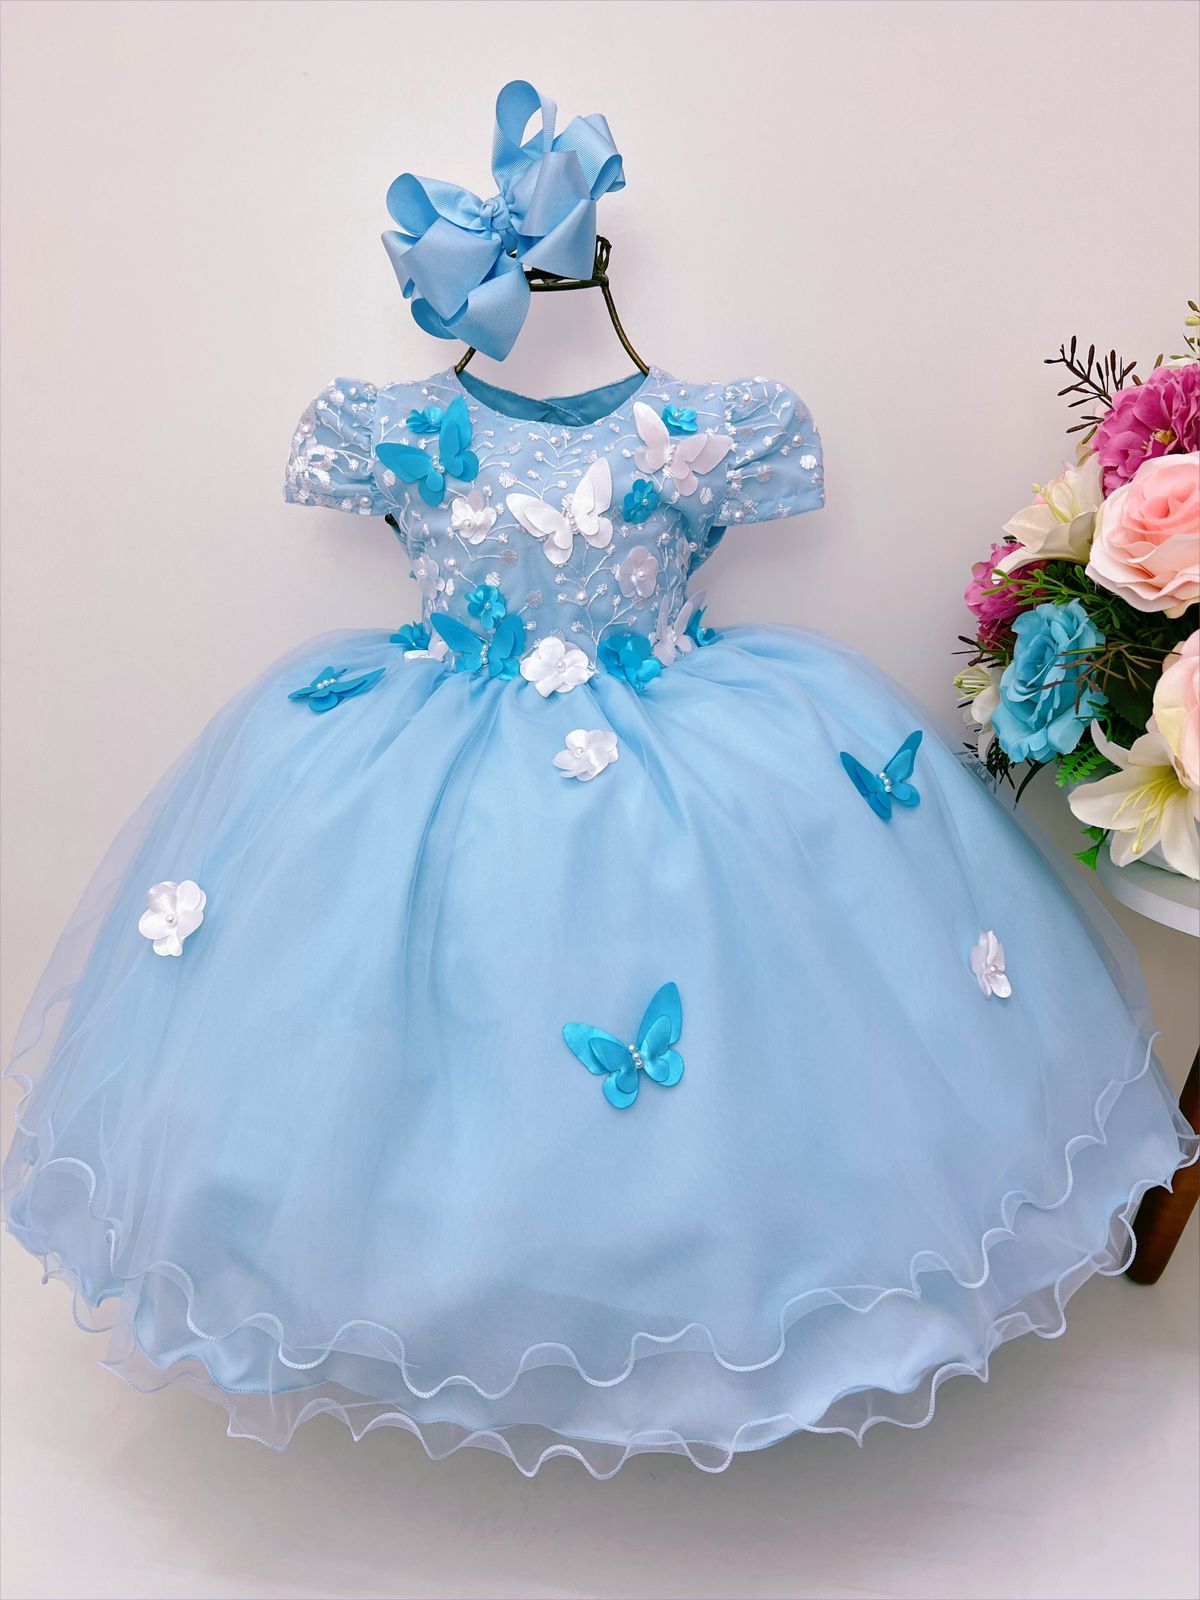 Vestido Infantil Azul Renda e Aplique de Borboletas Flores